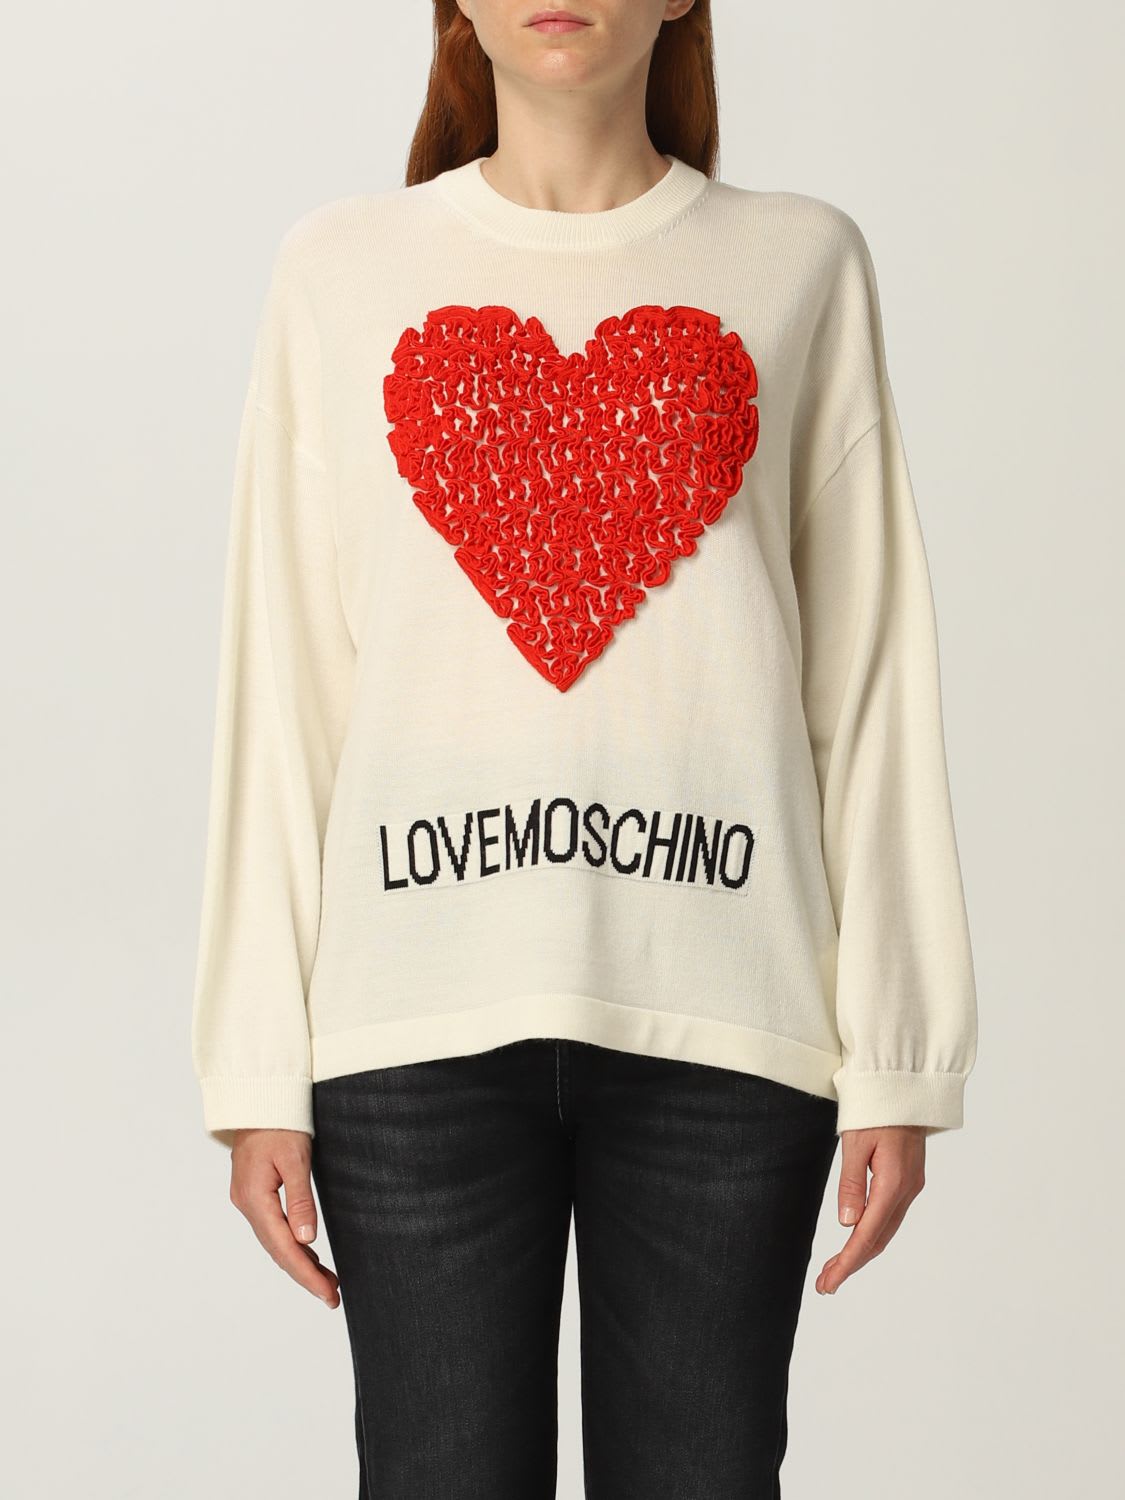 Love Moschino Sweater Round Neck With Rouche Heart